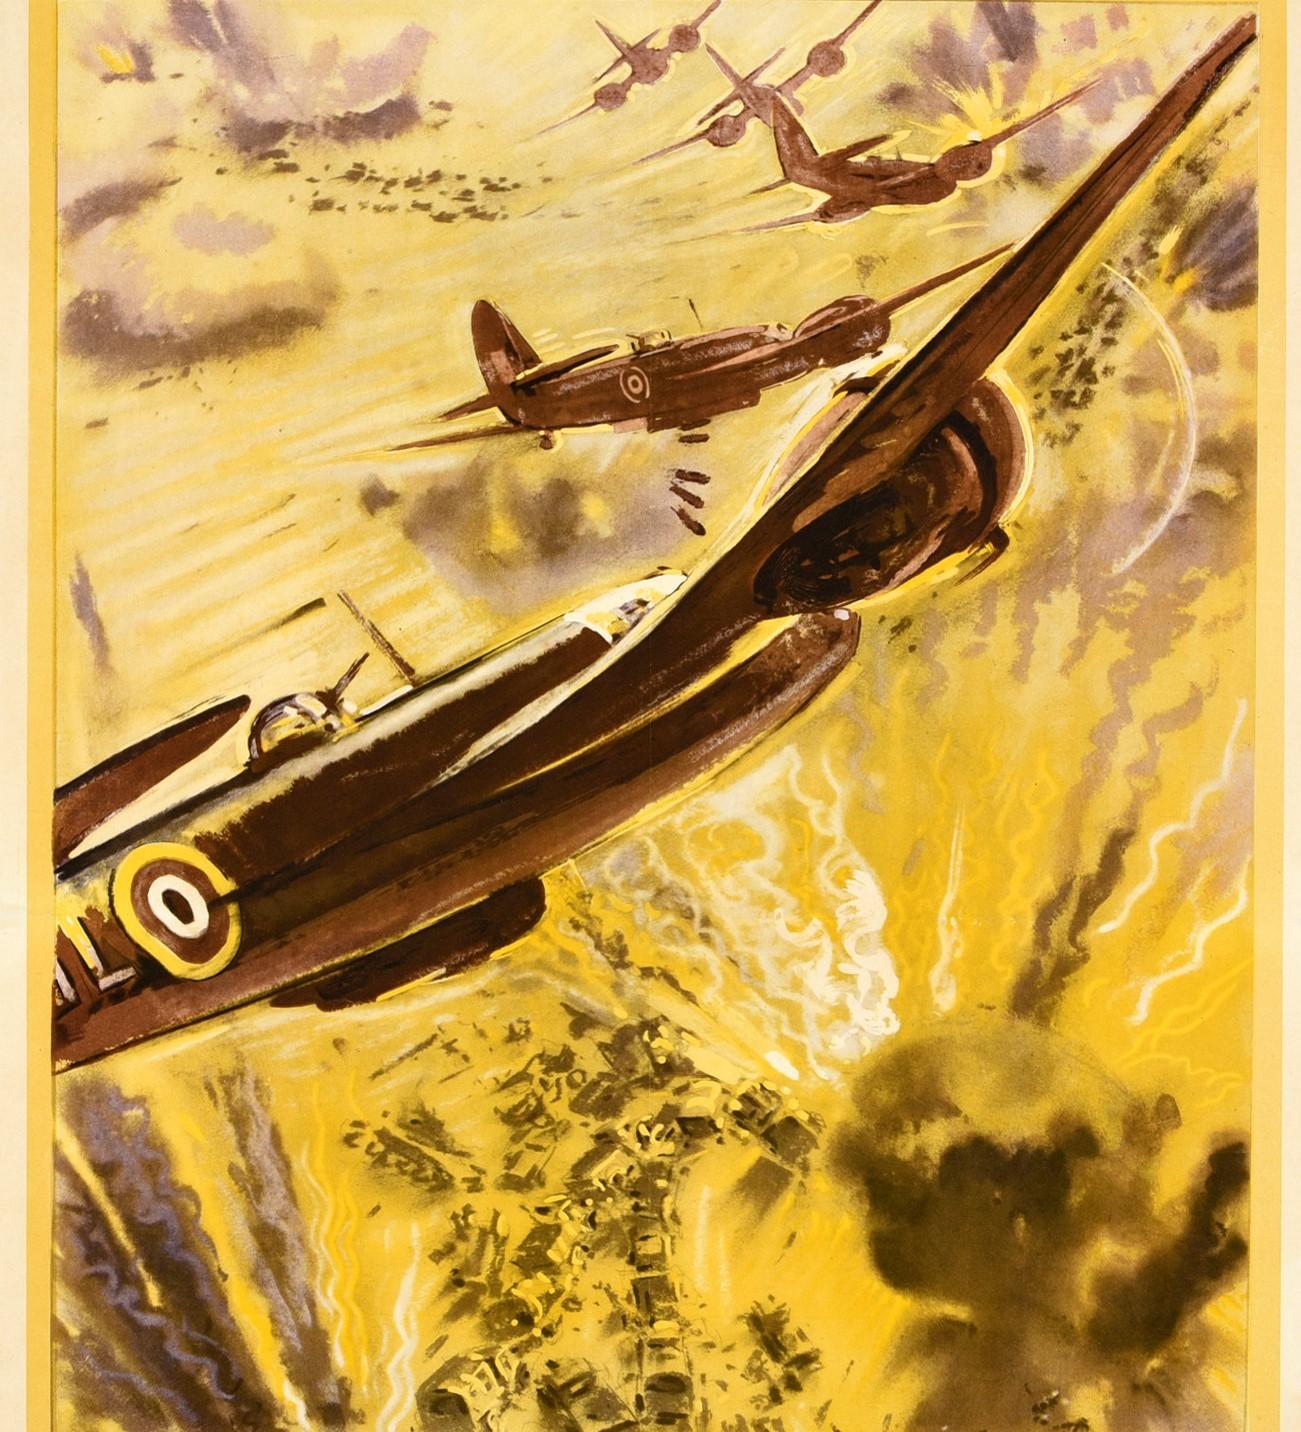 Original vintage World War Two propaganda poster in Portuguese - A Gra Bretanha Defensora de Liberdade Avios Britanicos 